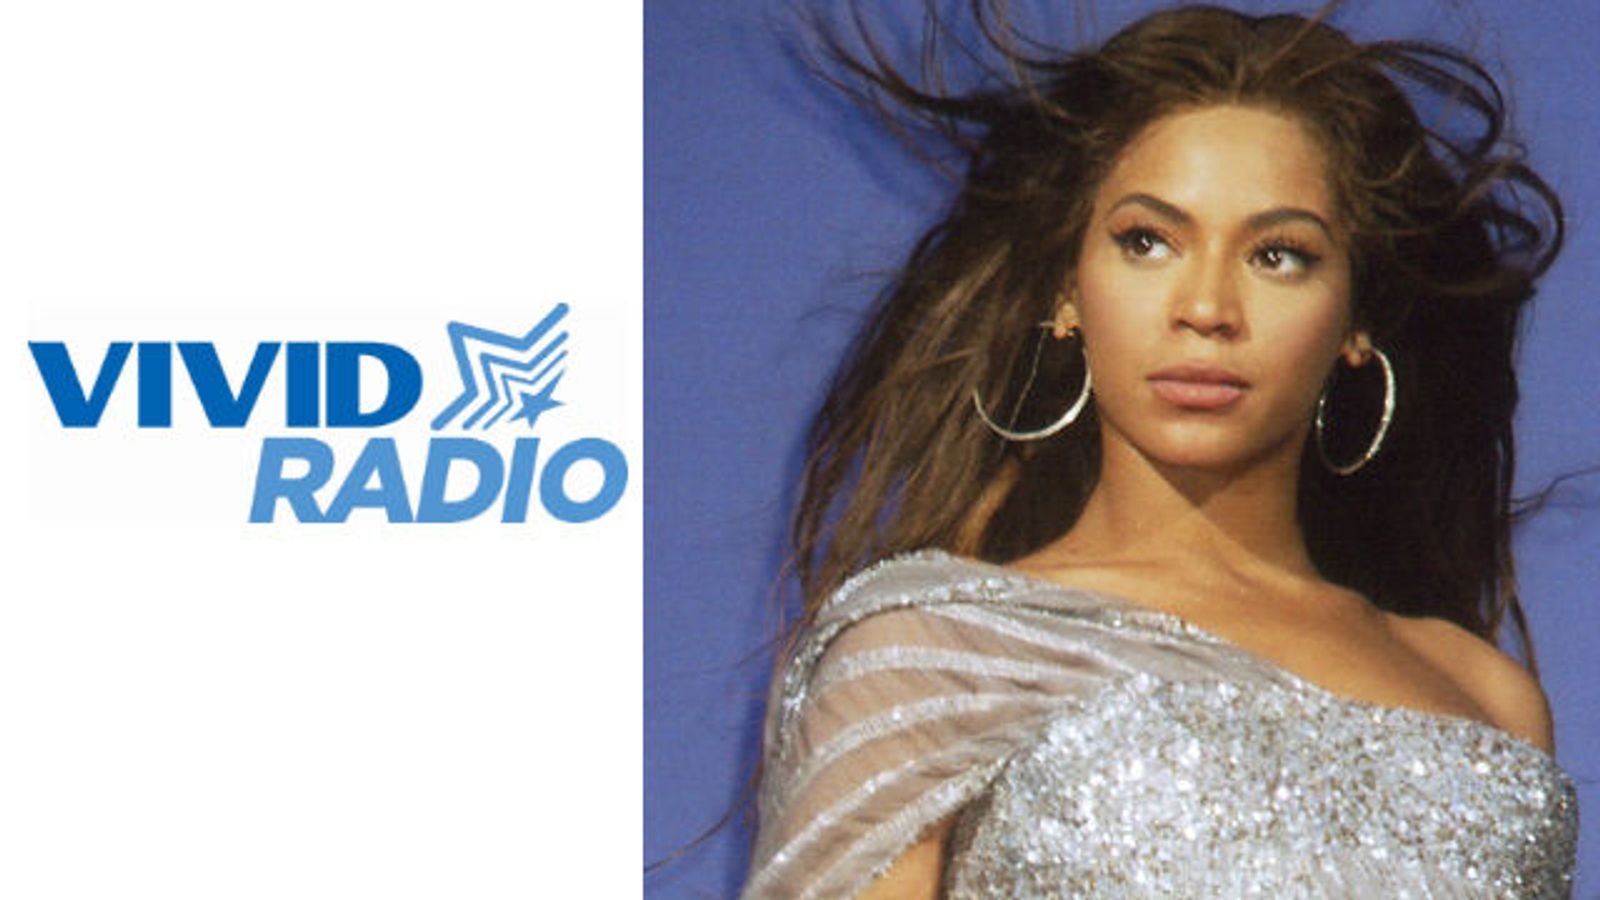 Beyoncé Tops VividRadio Valentine's Day 'One Night Stand' Survey